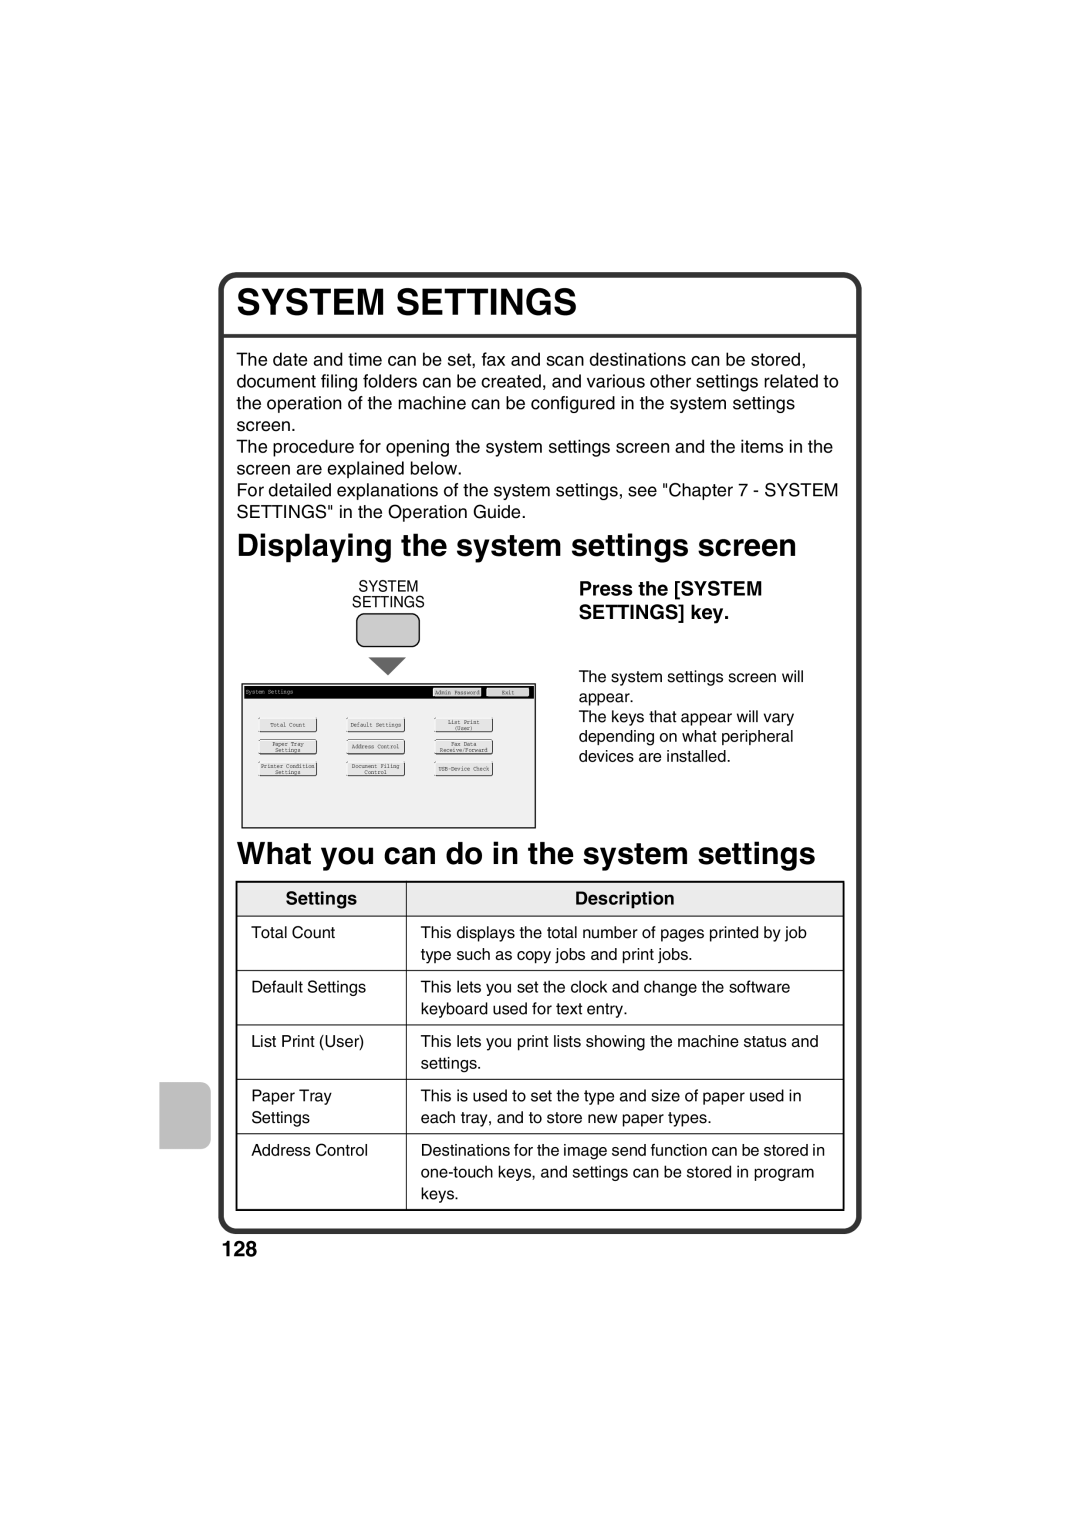 Sharp MX-B401 System Settings, Displaying the system settings screen, What you can do in the system settings, Description 